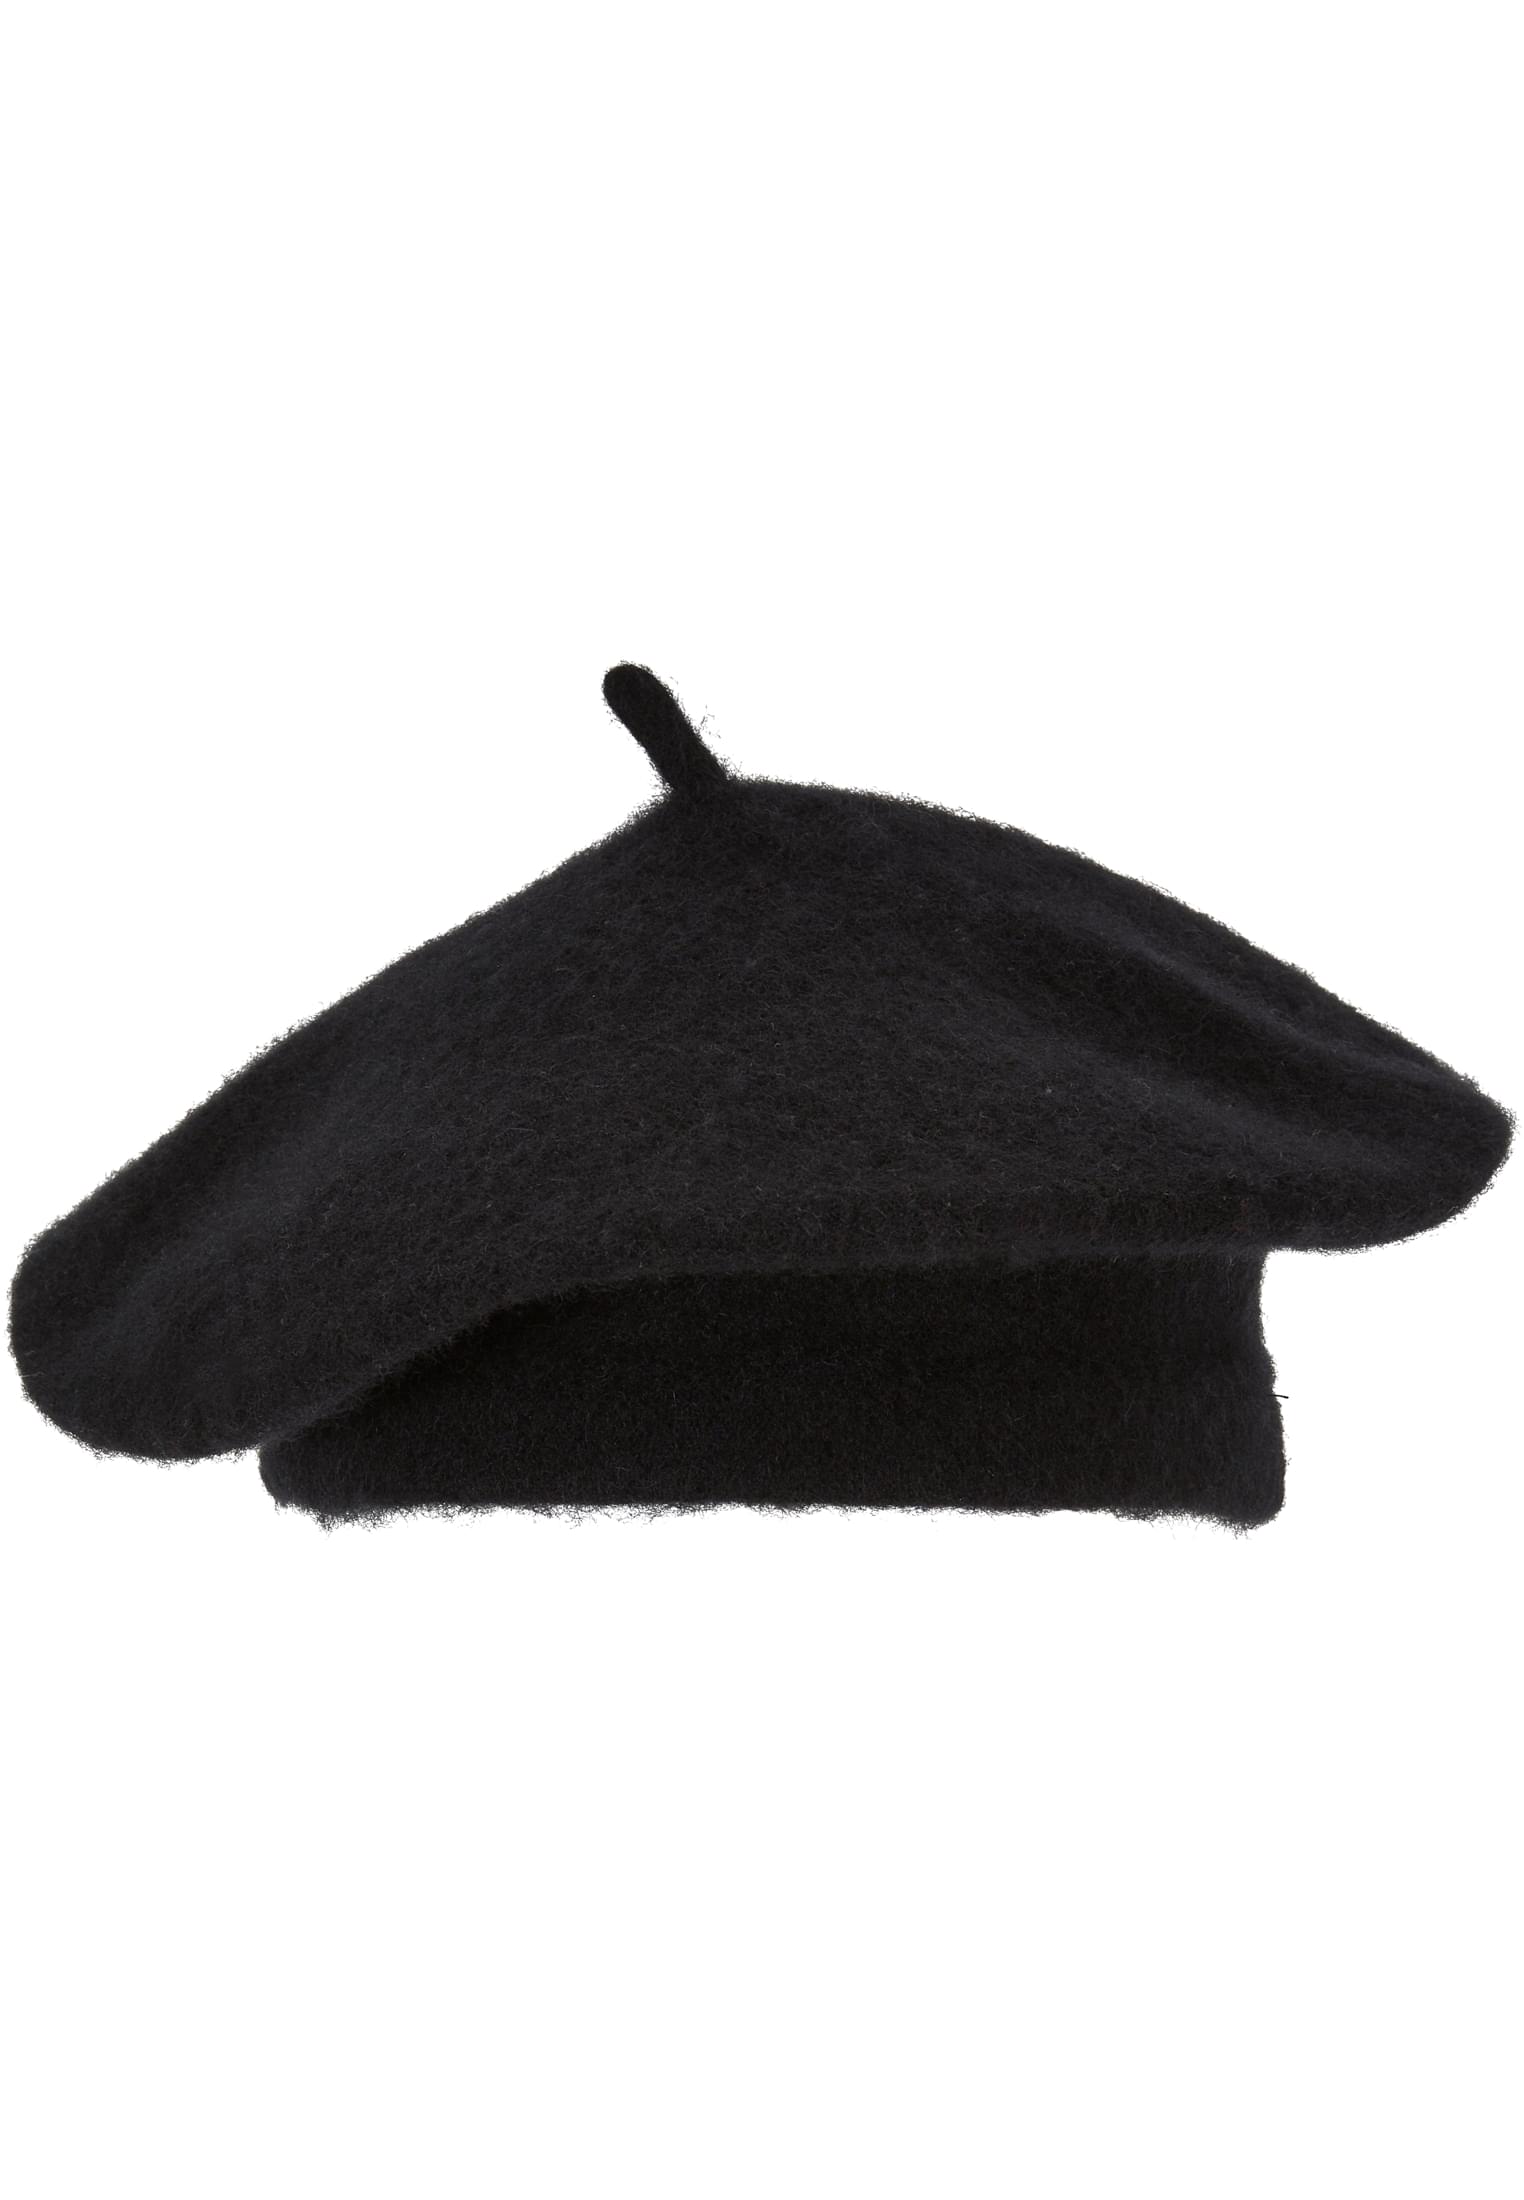 Beret hat black